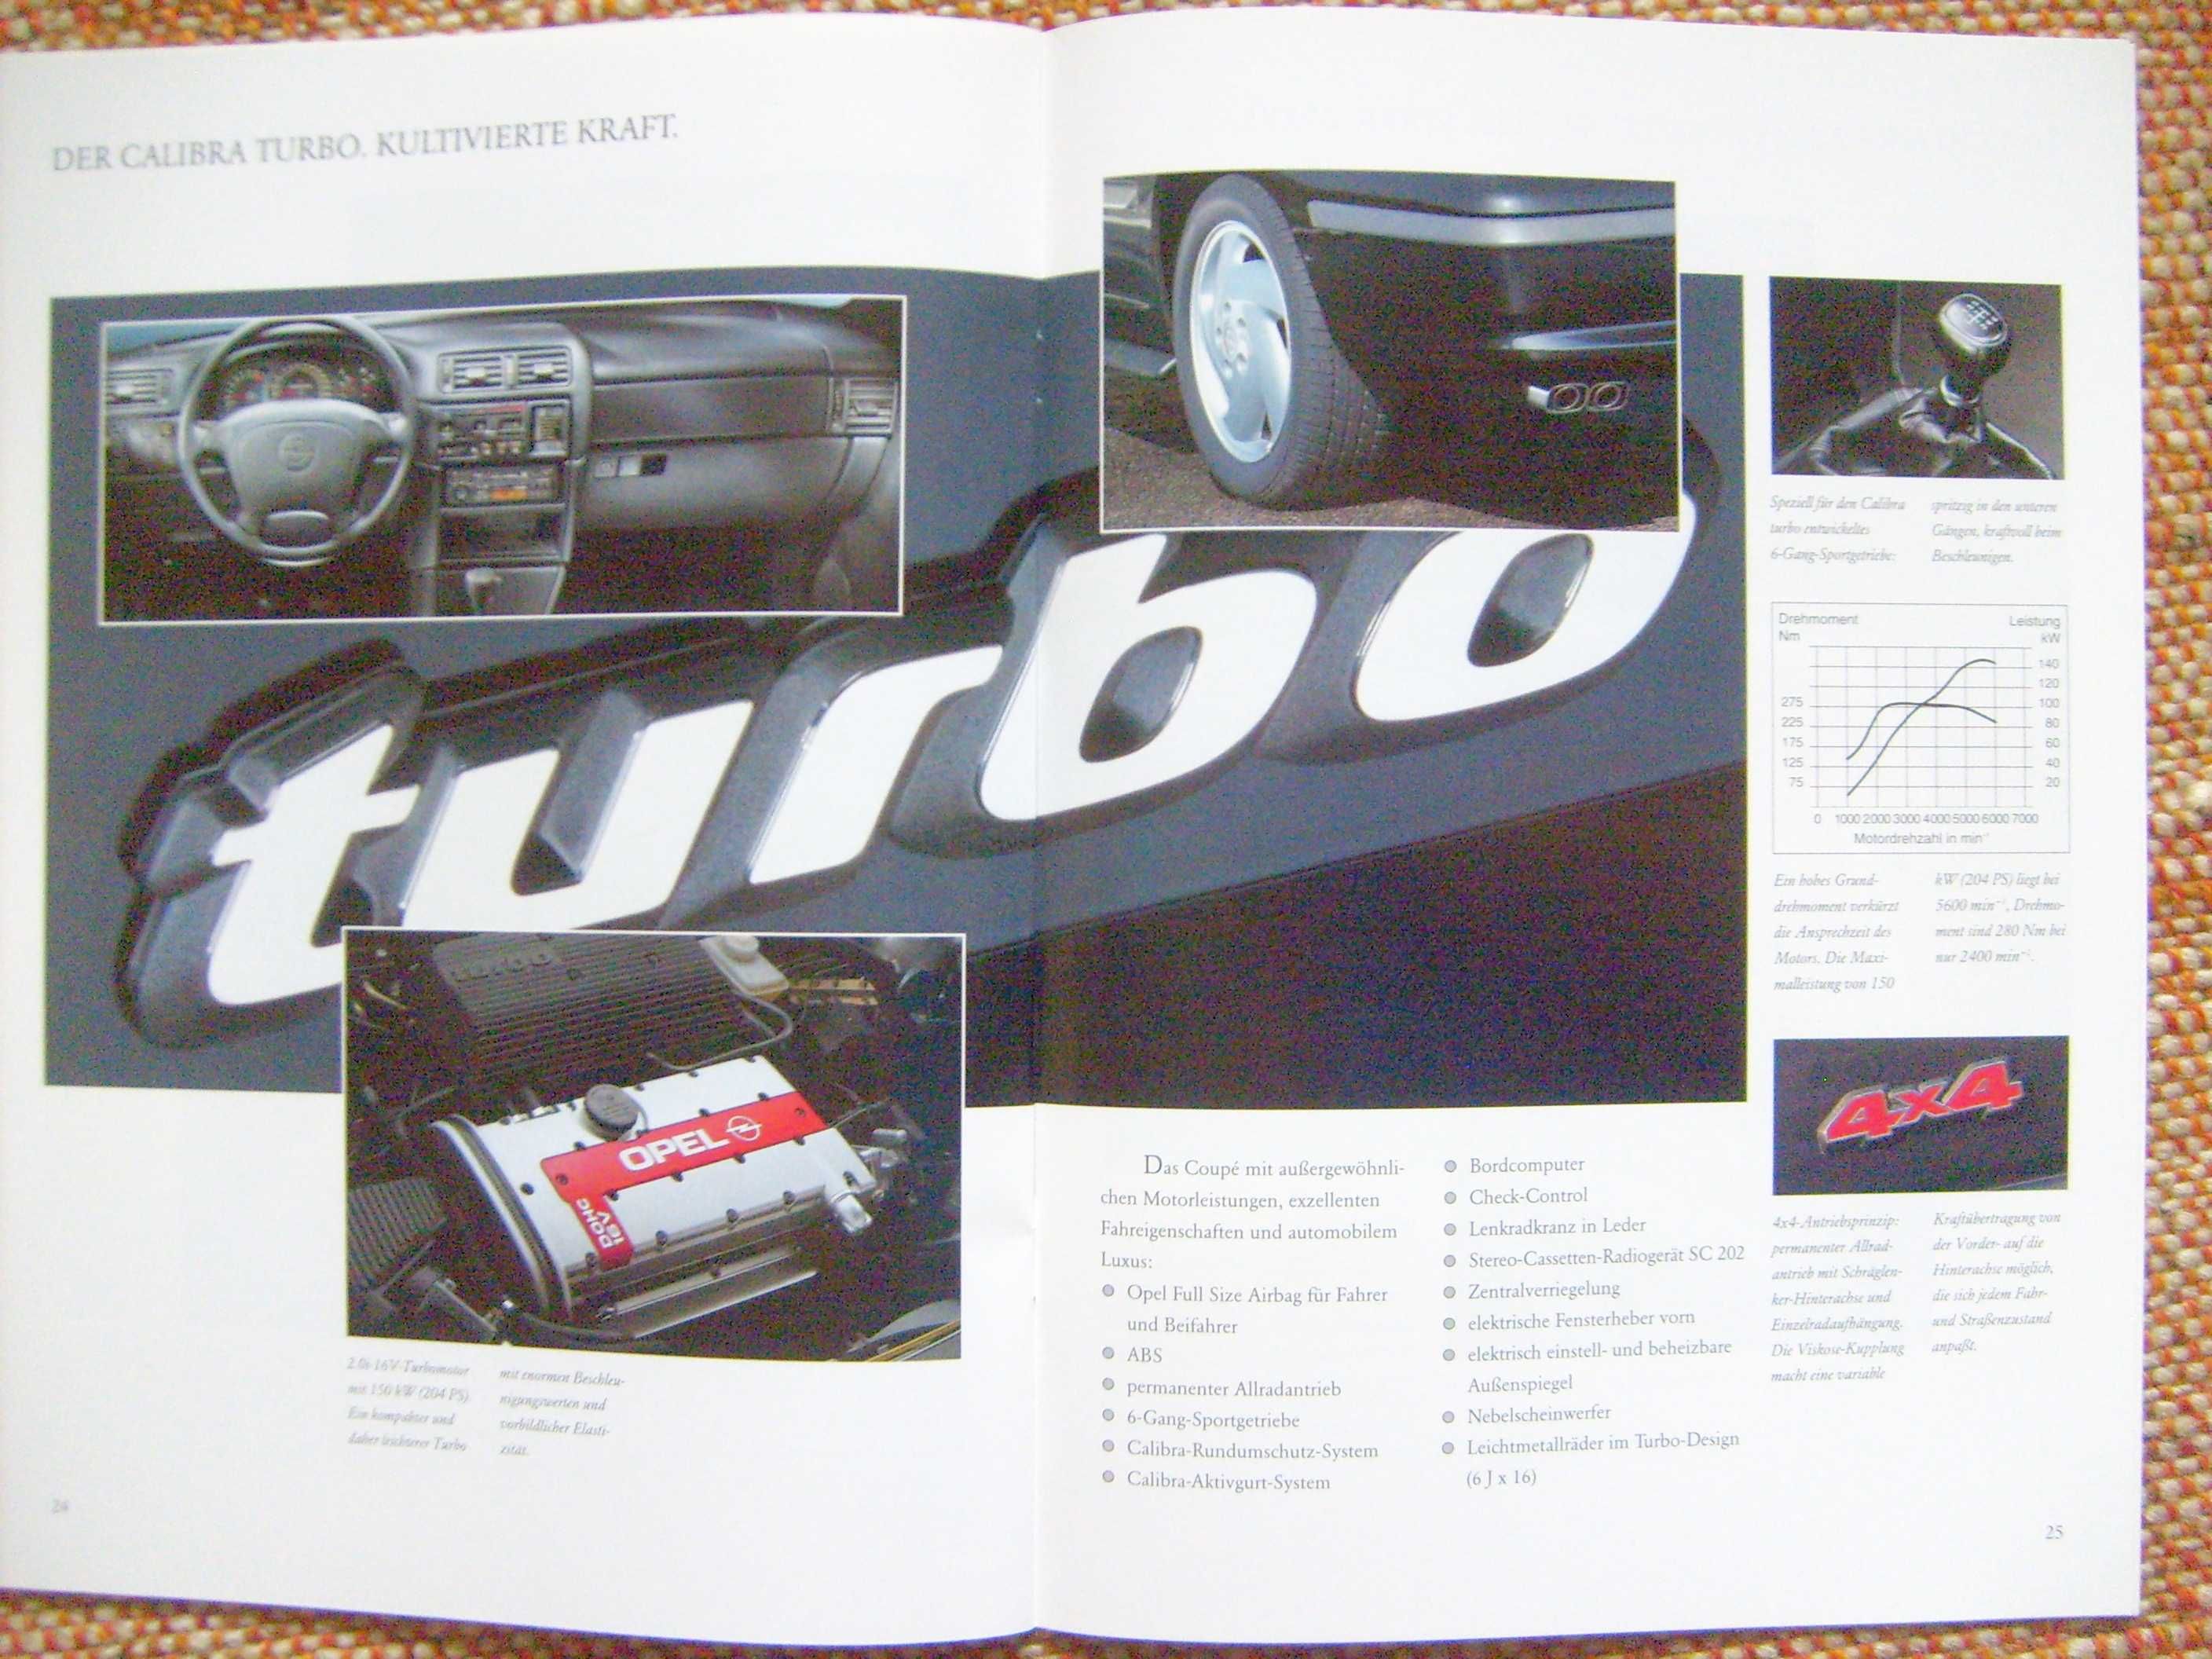 OPEL CALIBRA '94 /2.0i ,2.0i 4x4, 2.0i 16V, V6, Turbo/ prospekt 40 str